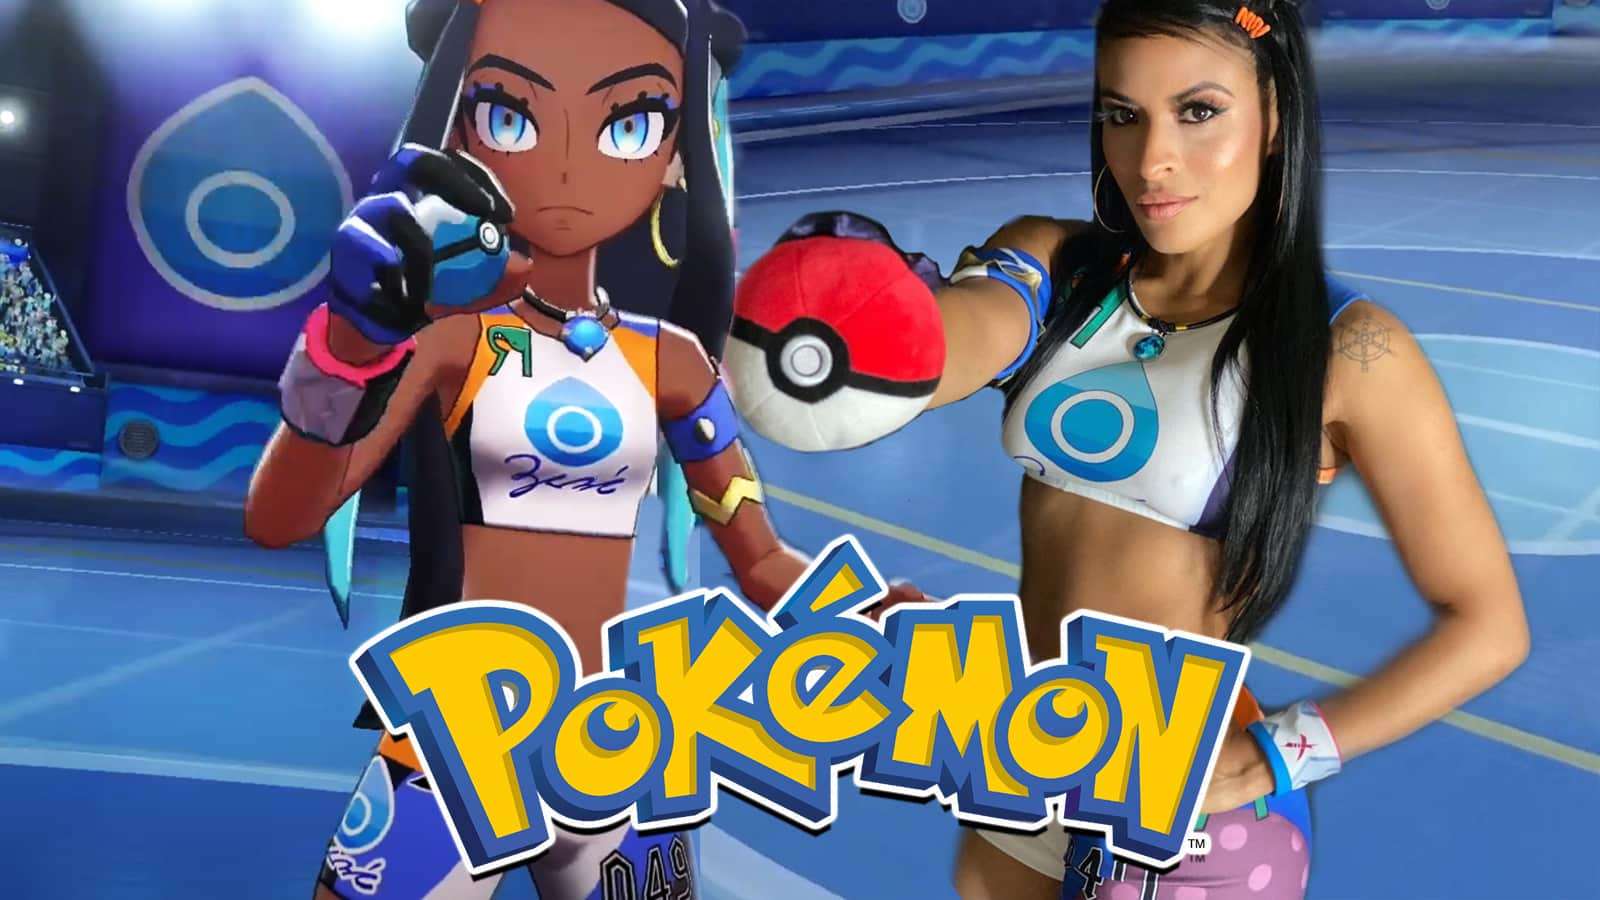 Pokemon Sword & Shield Gym Leader Nessa next to WWE Star Zelina Vega